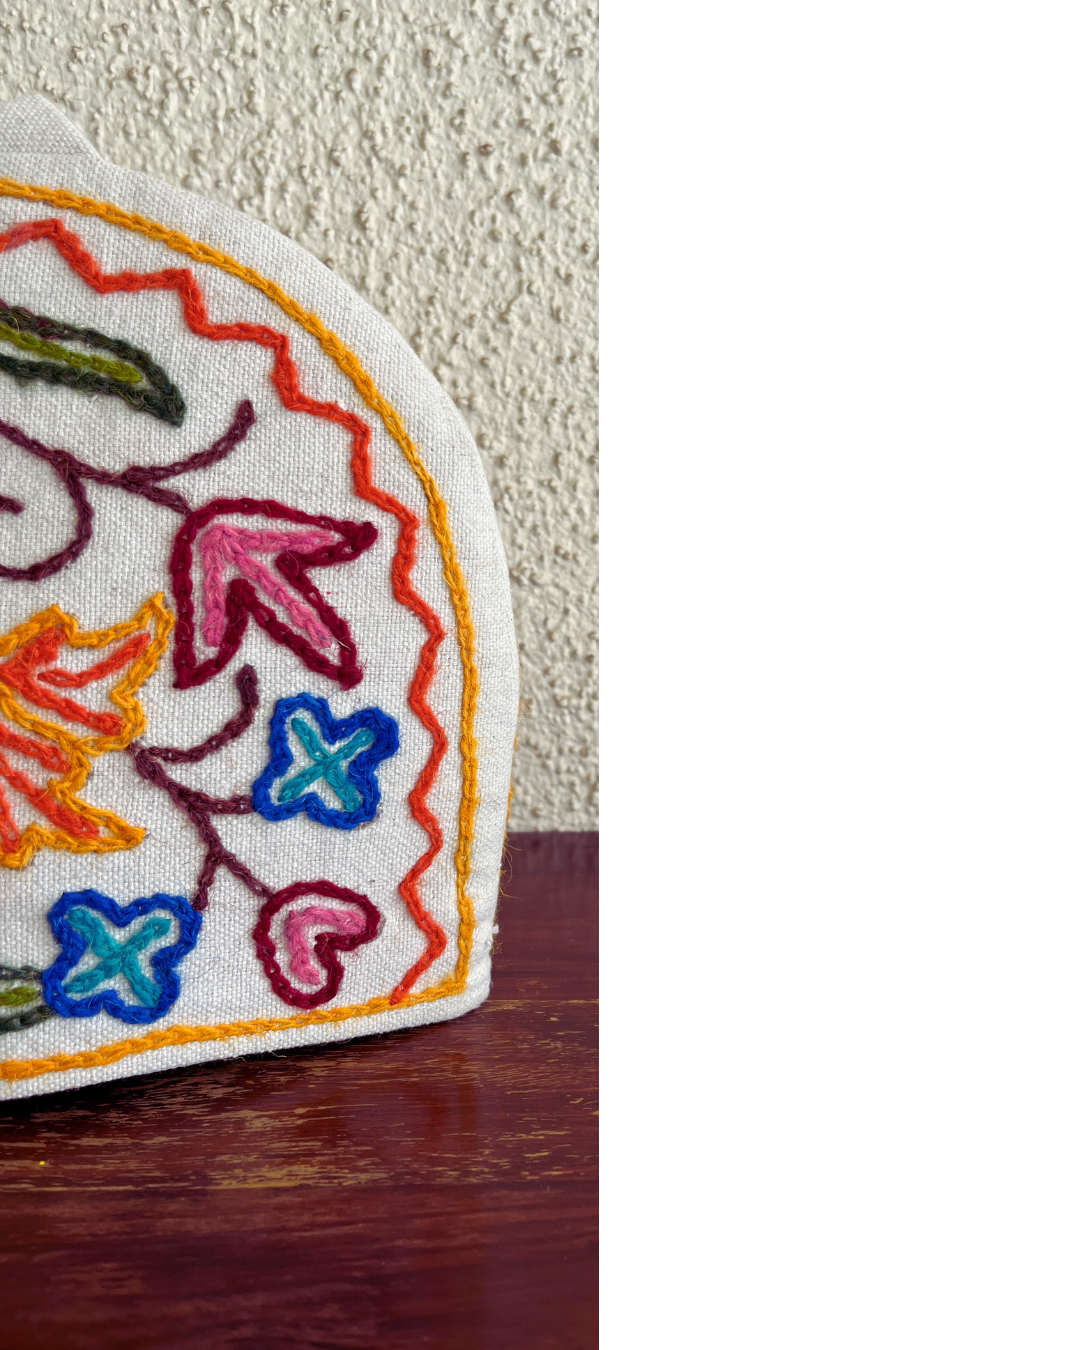 Handmade Tea Cosy - Kashmiri crewel embroidery, Medium